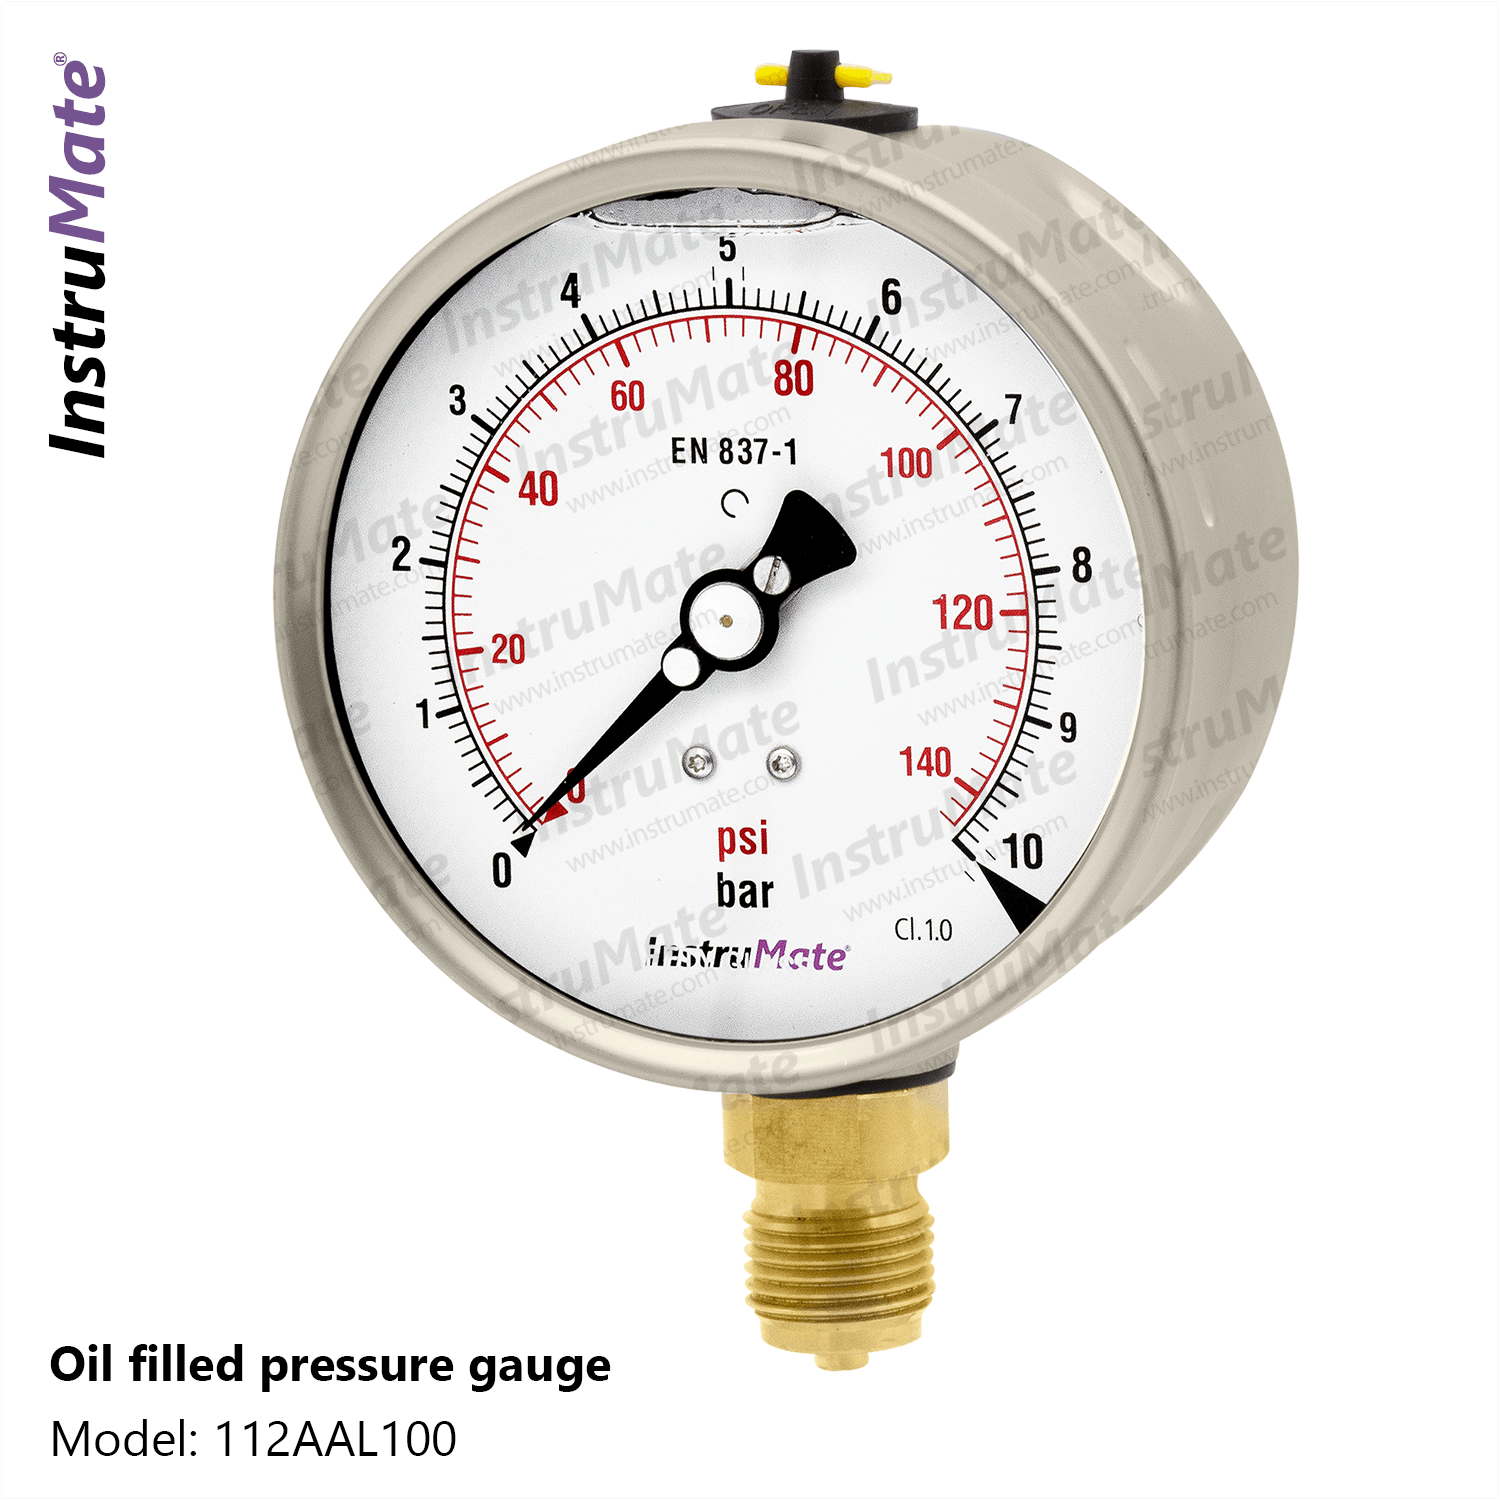 Oil Filled Pressure Gauge - 112AA - InstruMate